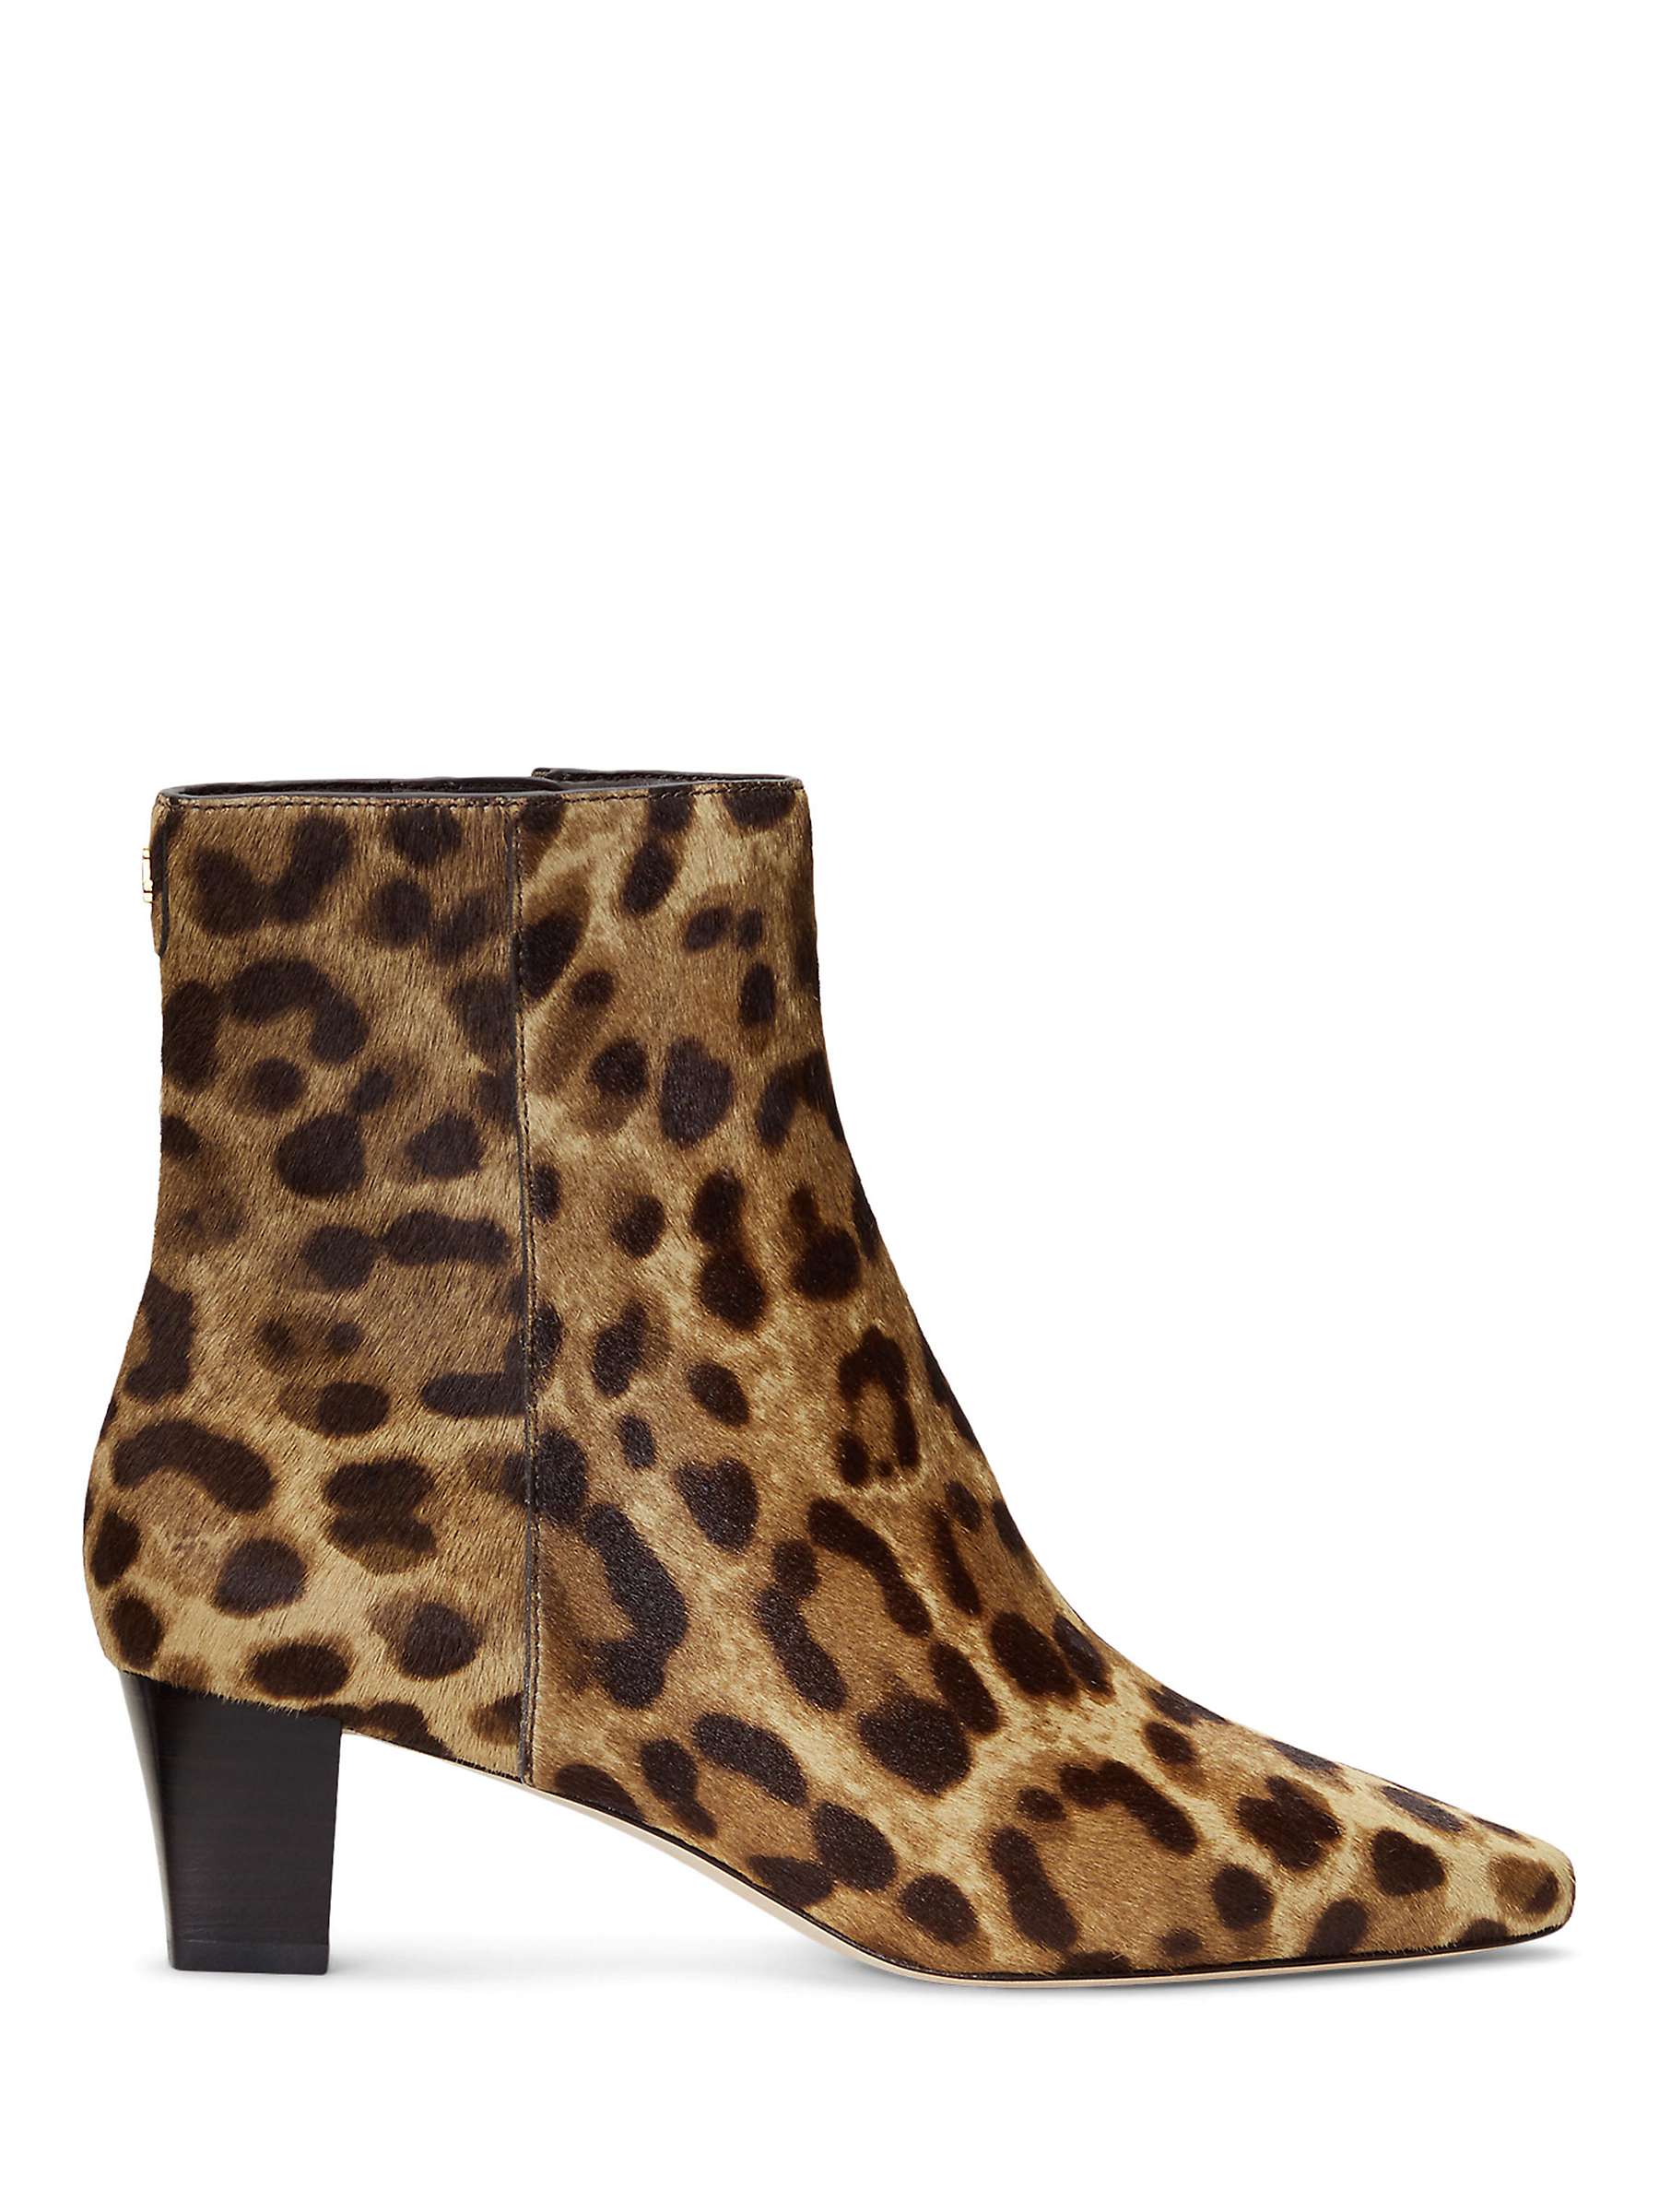 Lauren Ralph Lauren Willa Suede Ankle Boots, Chestnut Leopard at John ...